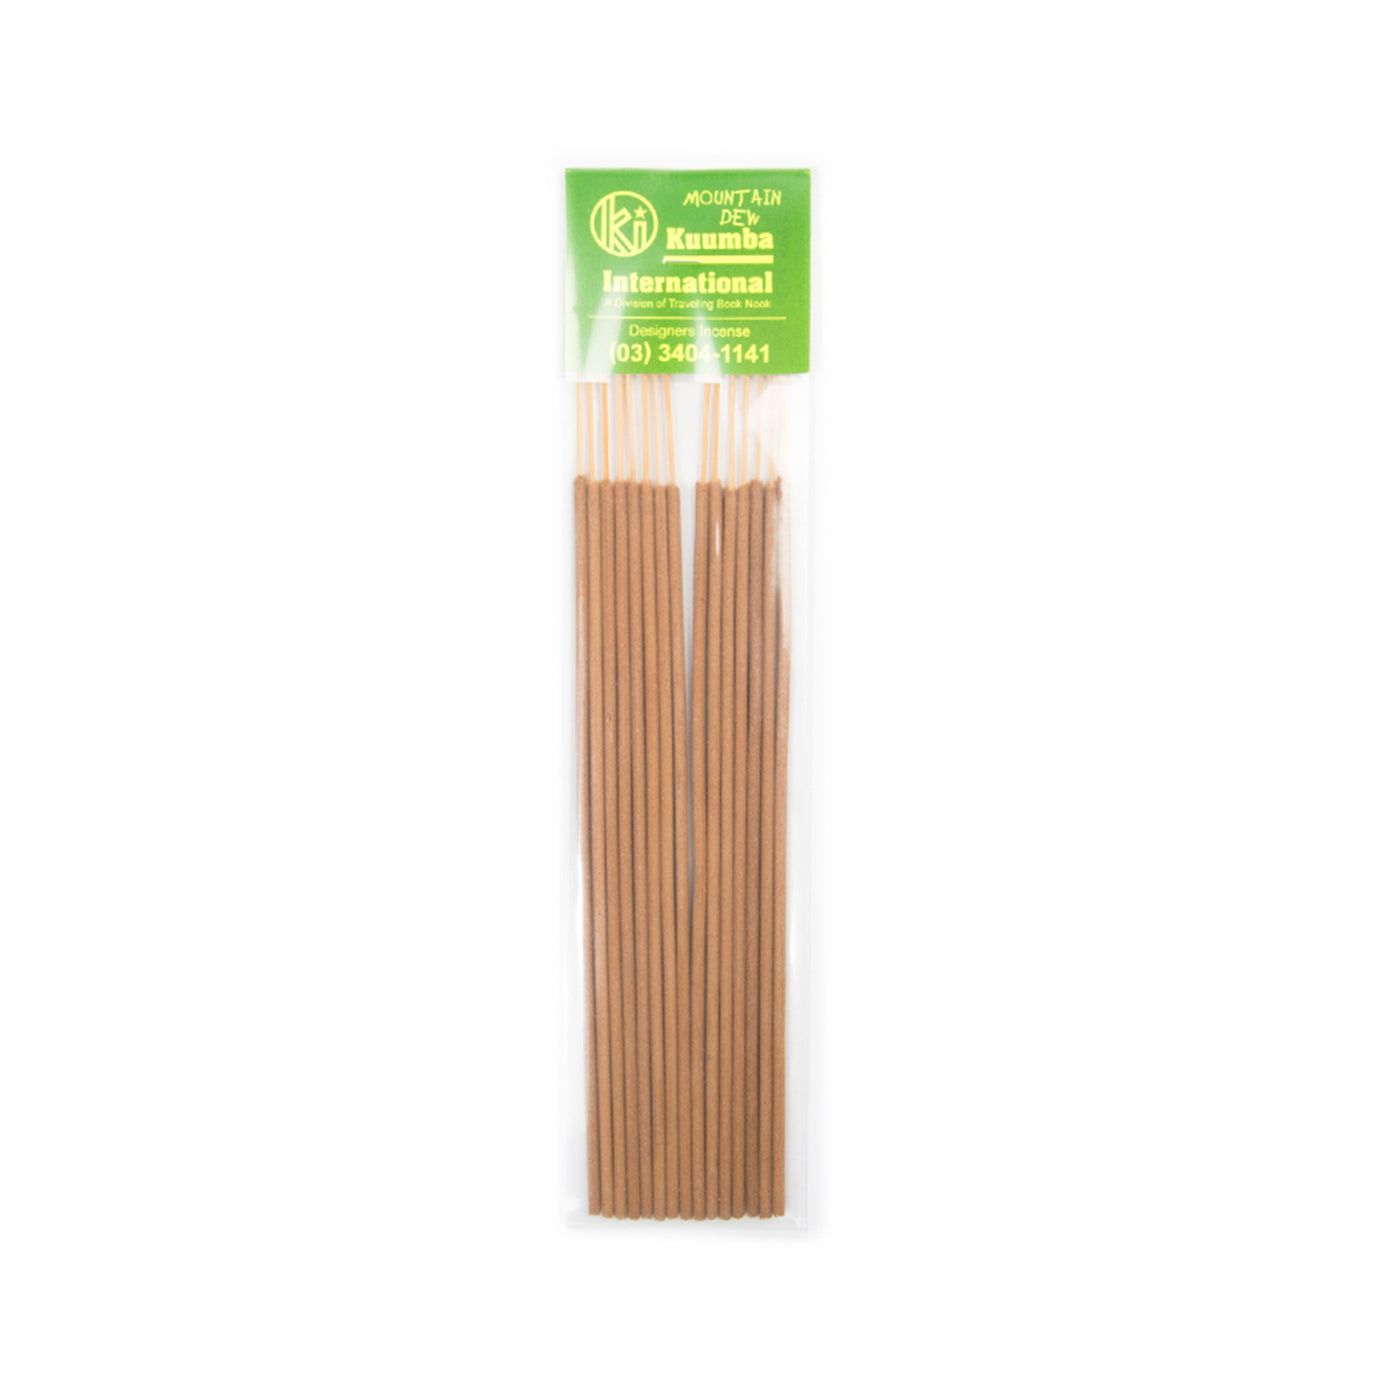 Kuumba incense regular sticks